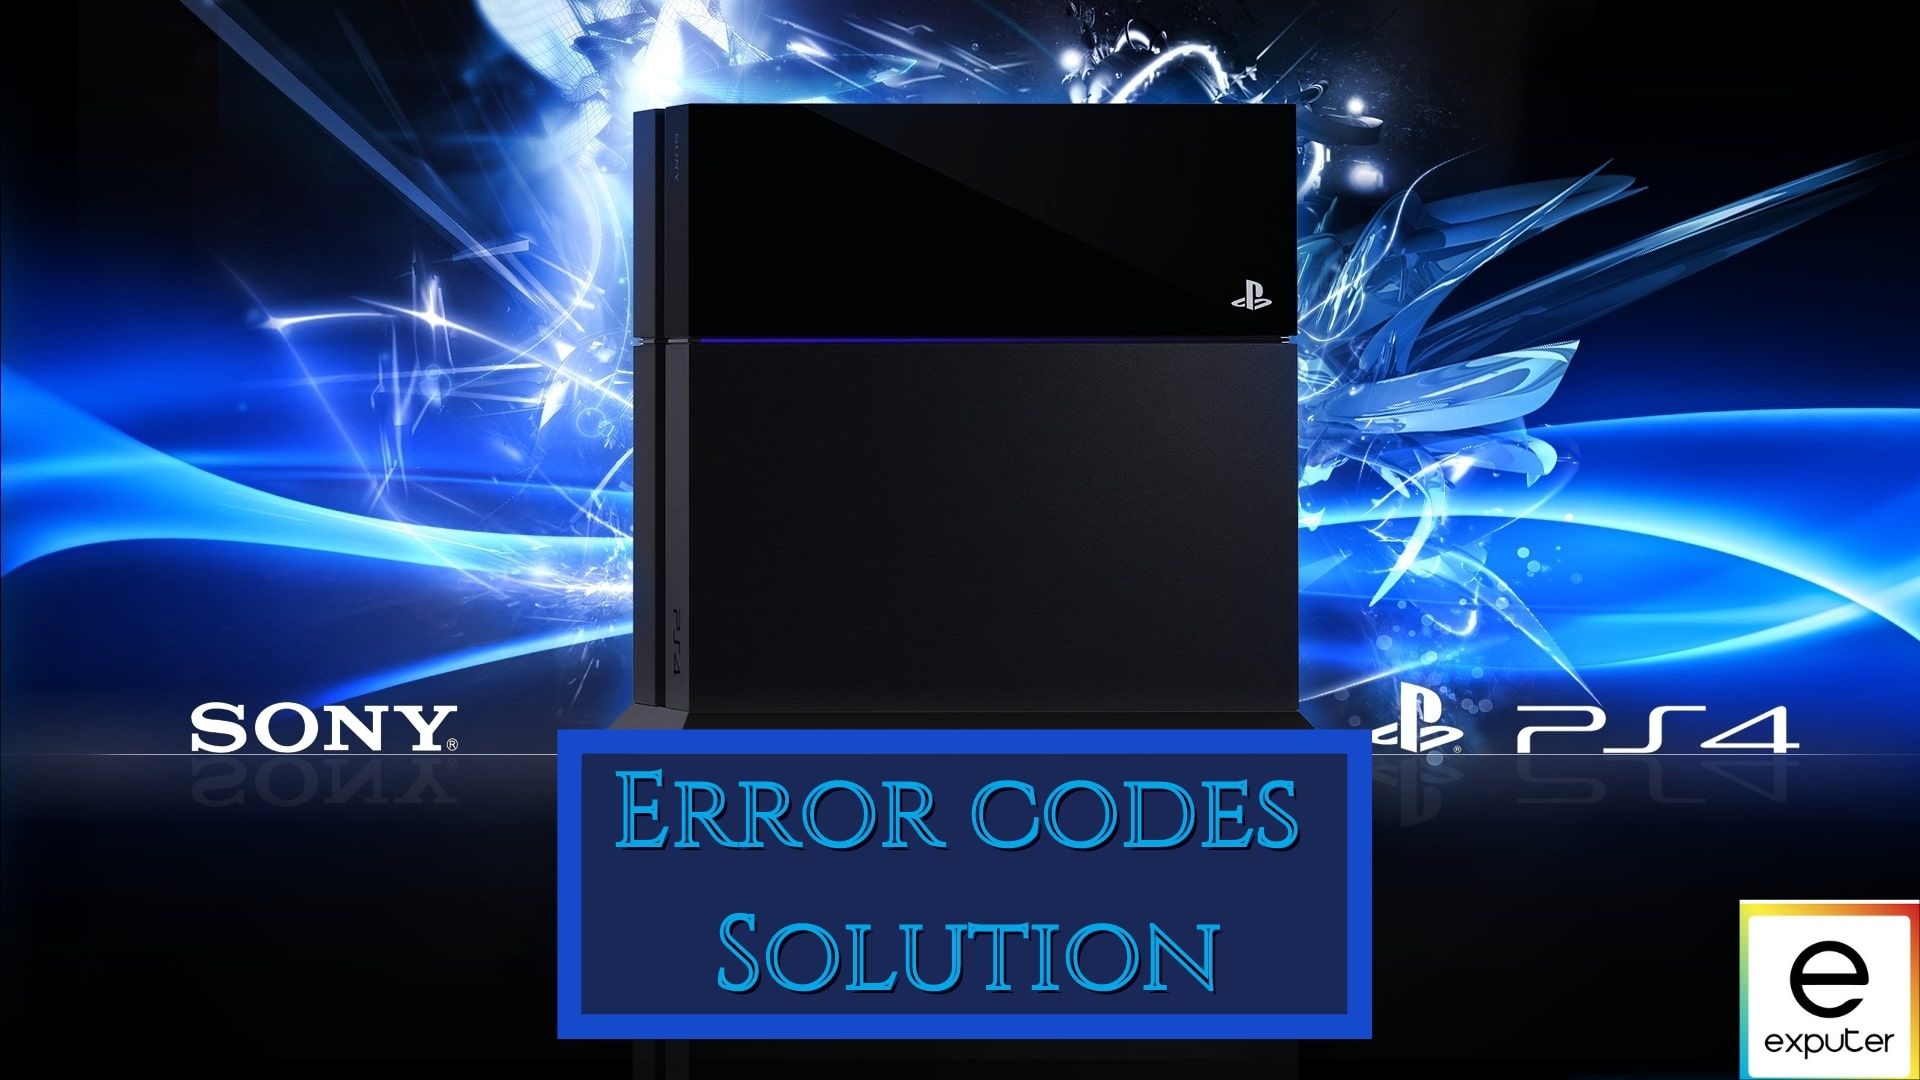 All PS4 Error Codes [SOLVED eXputer.com